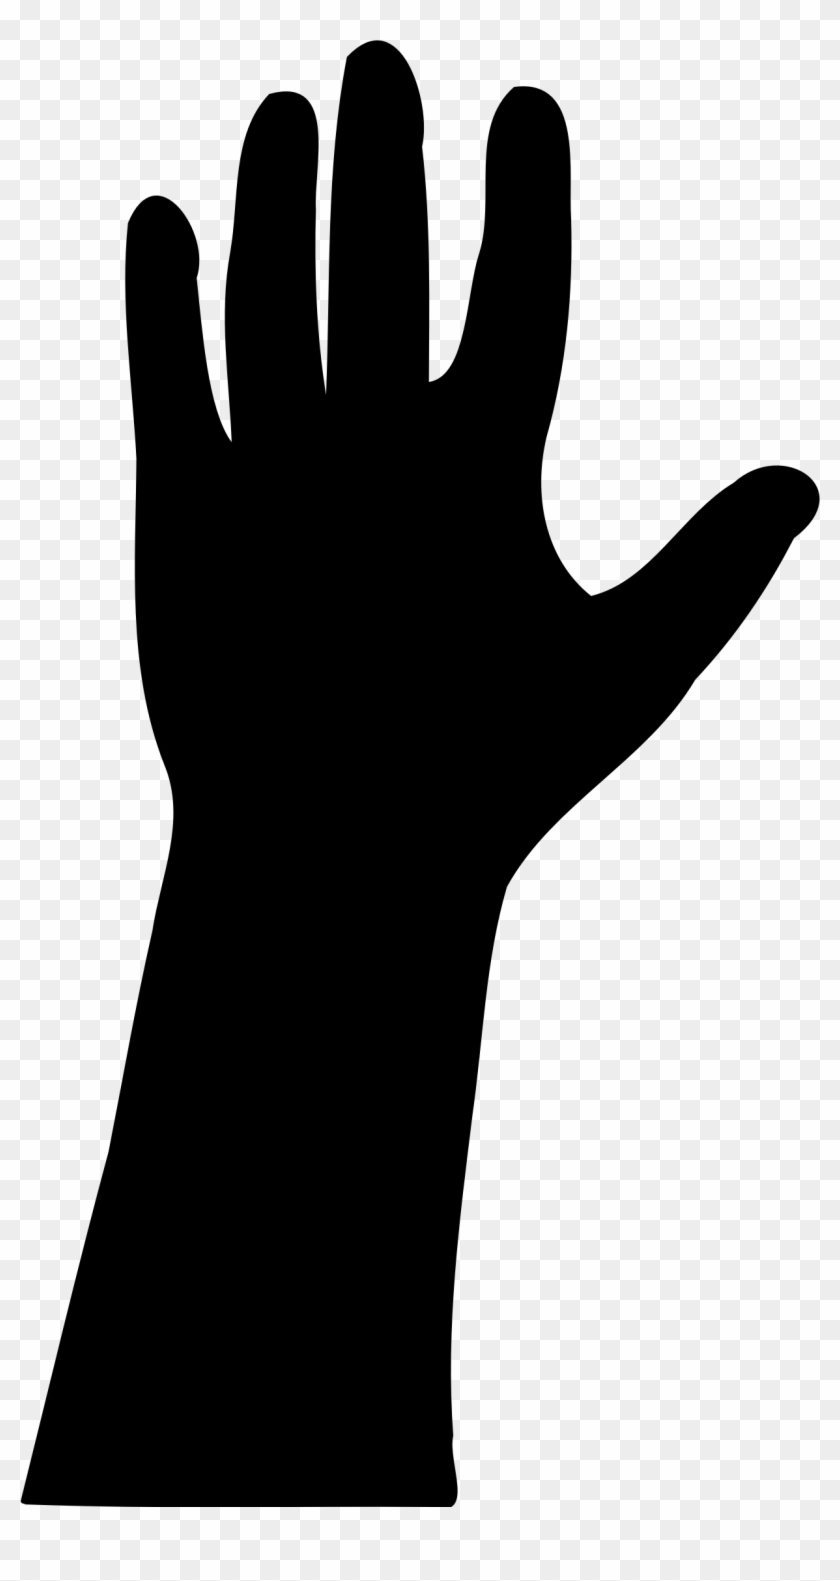 Hand Clip Art - Raising Hand Silhouette Png #489037